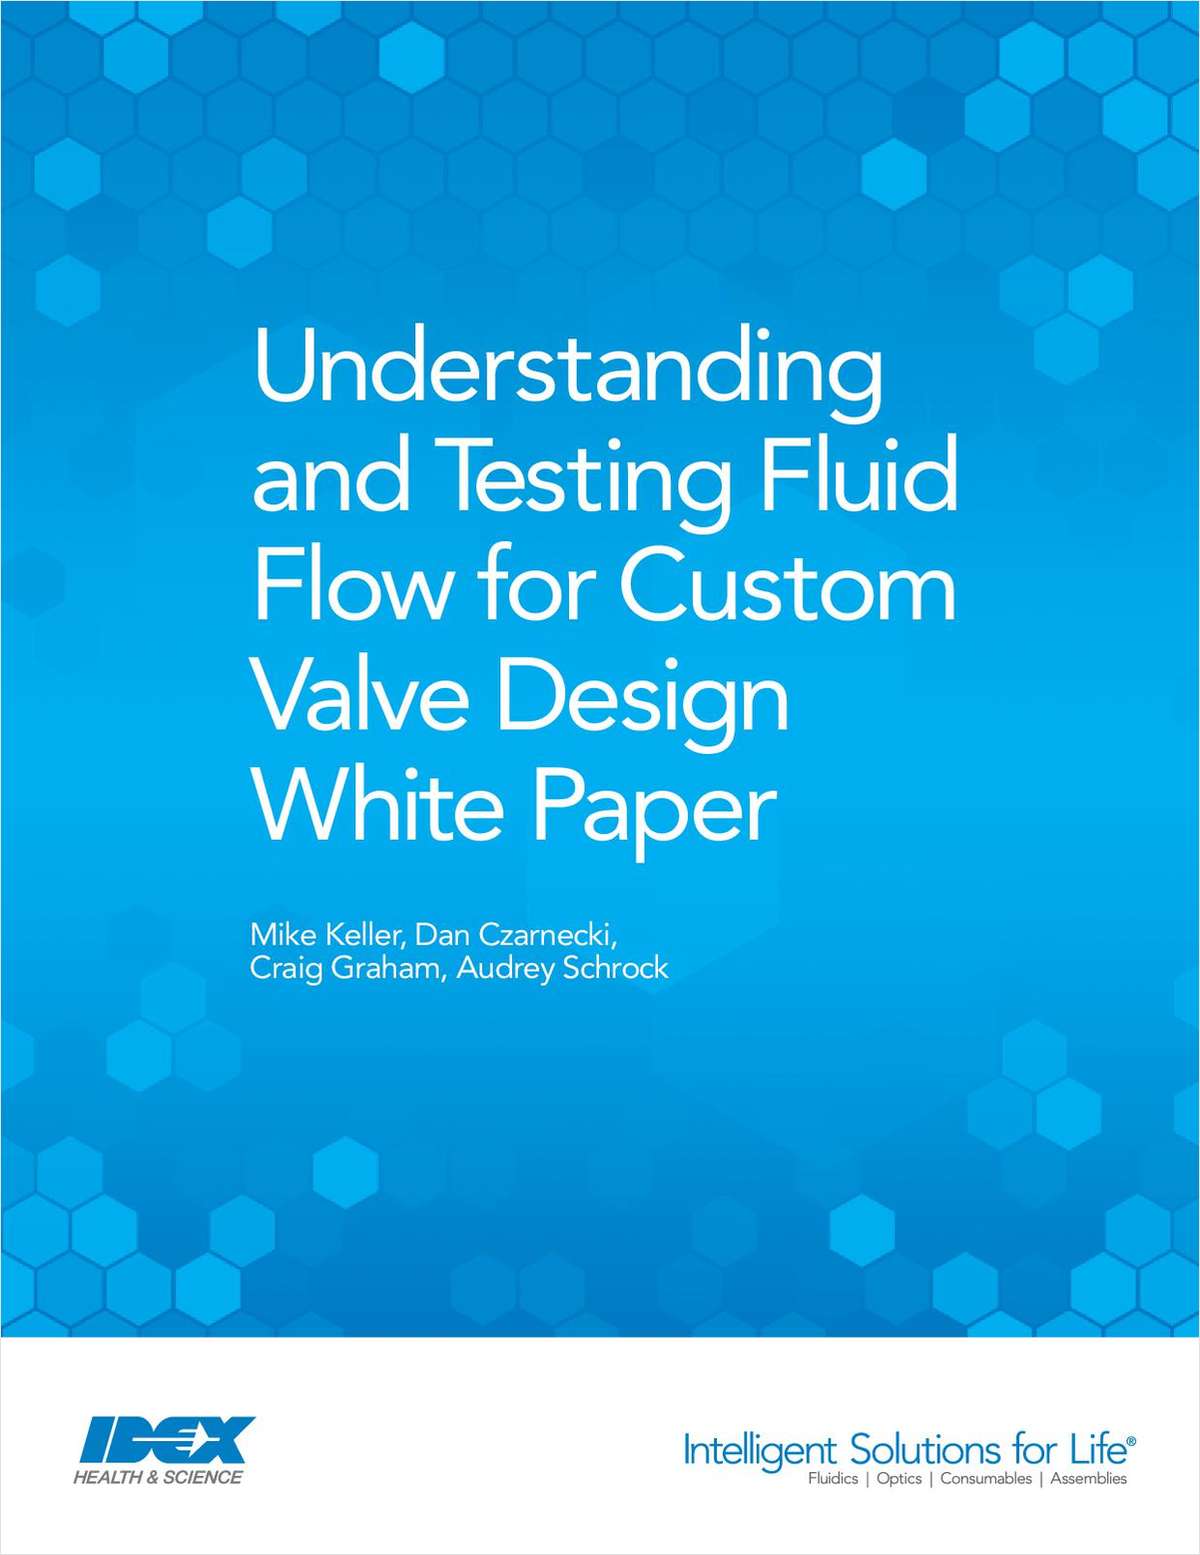 Understanding and Testing Fluid Flow for Custom Valve Design